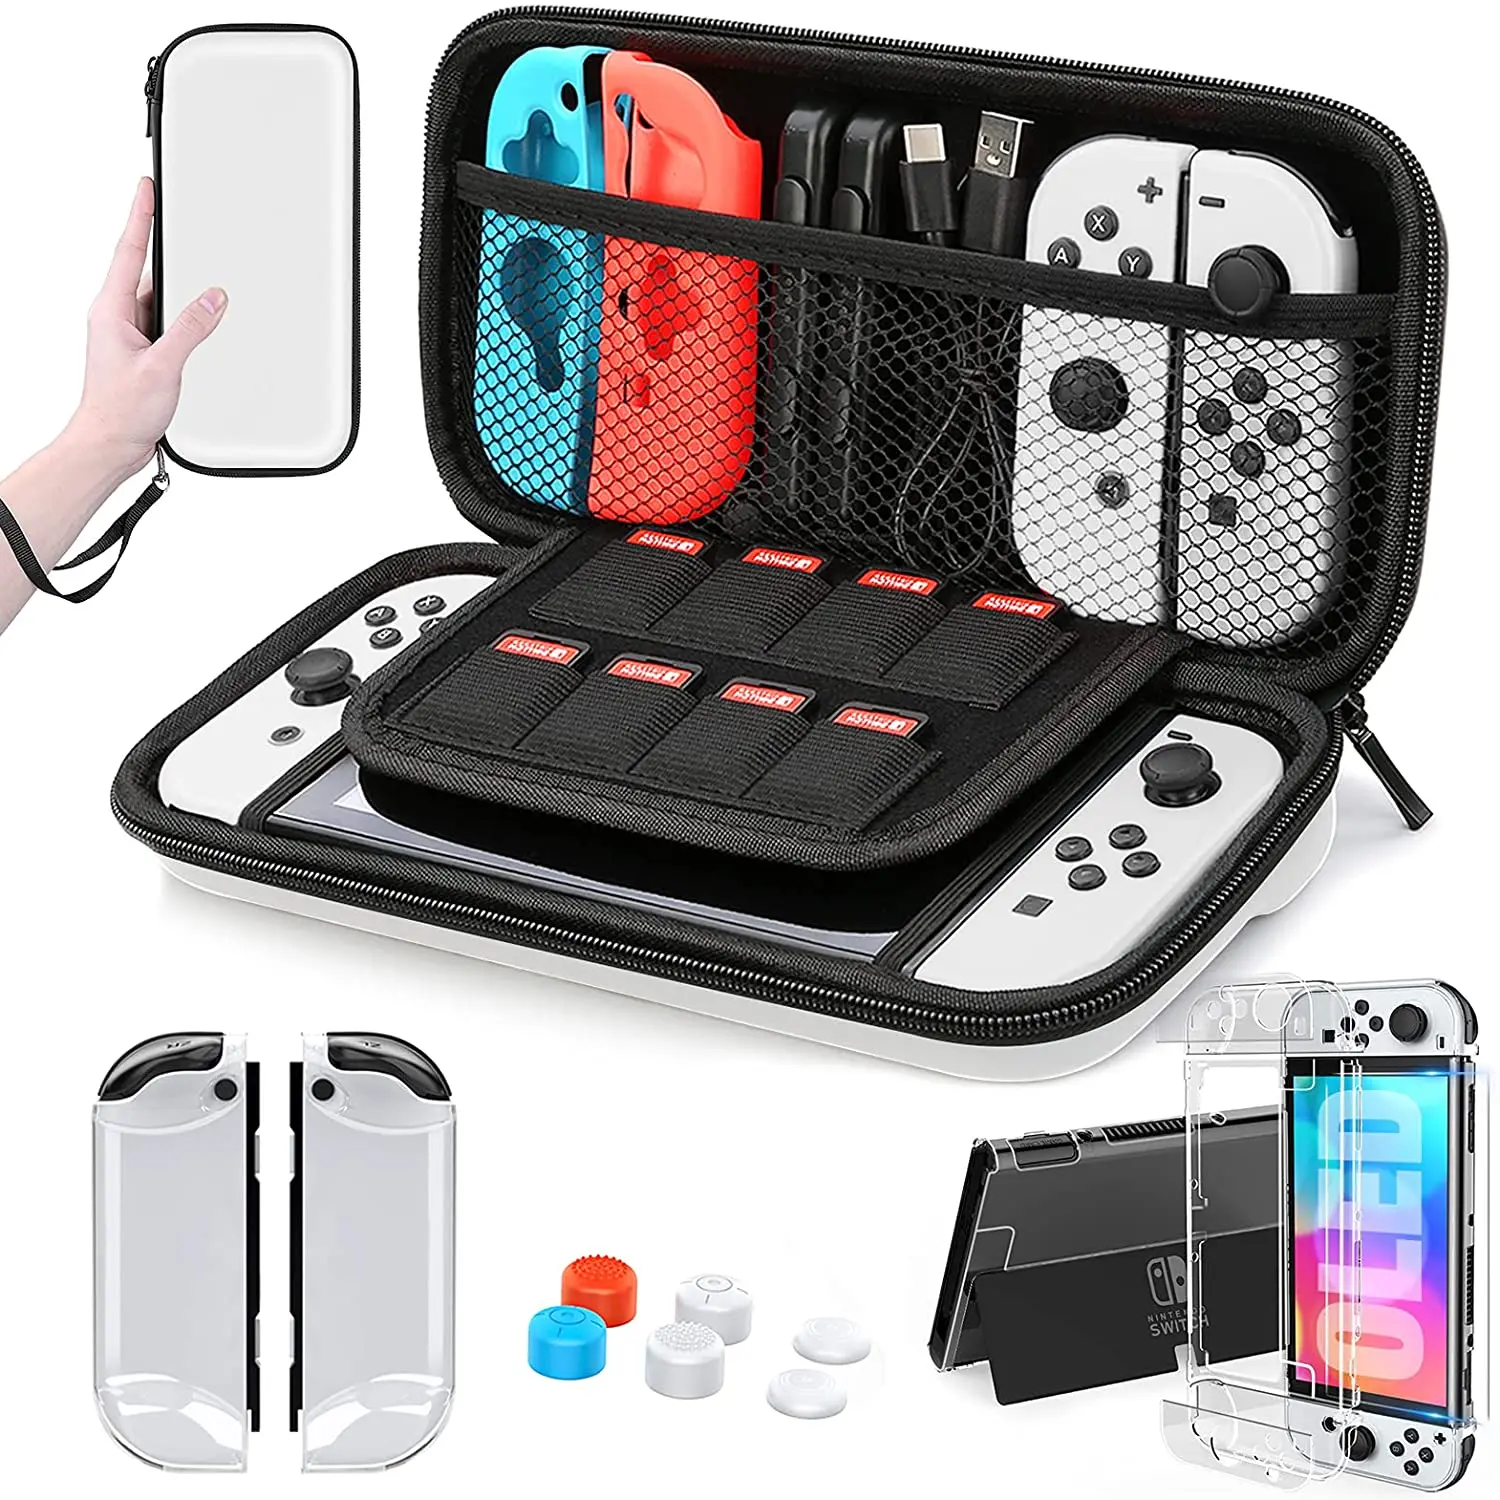 

HEYSTOP Nintendo Switch OLED Model Carrying Case, 9 in 1 Accessories Kit for 2021 Nintendo Switch OLED Model